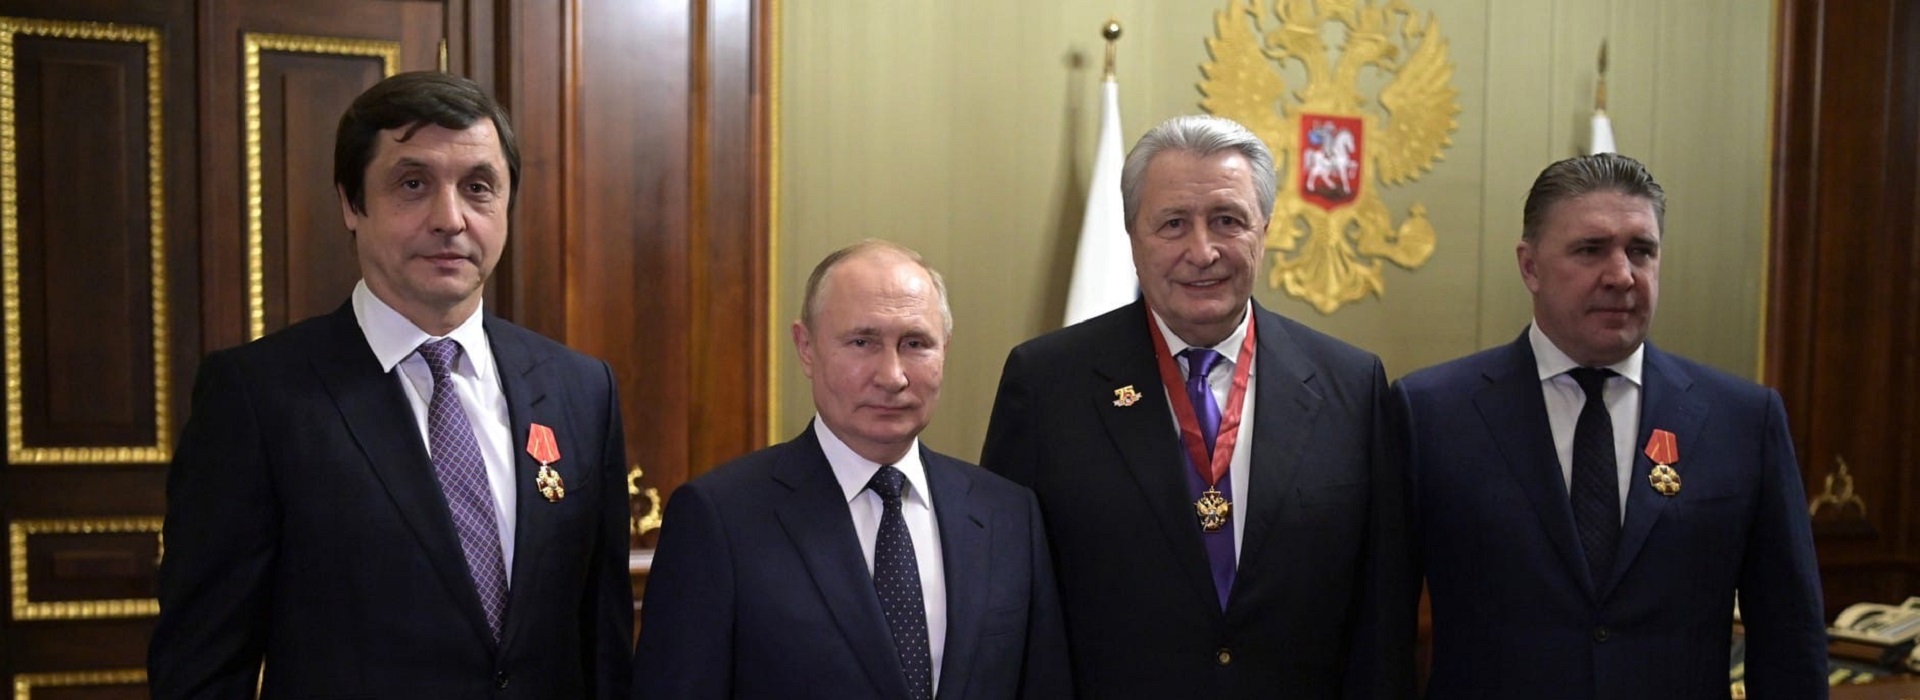 Владимир Путин вручил государственную награду Александру Якушеву